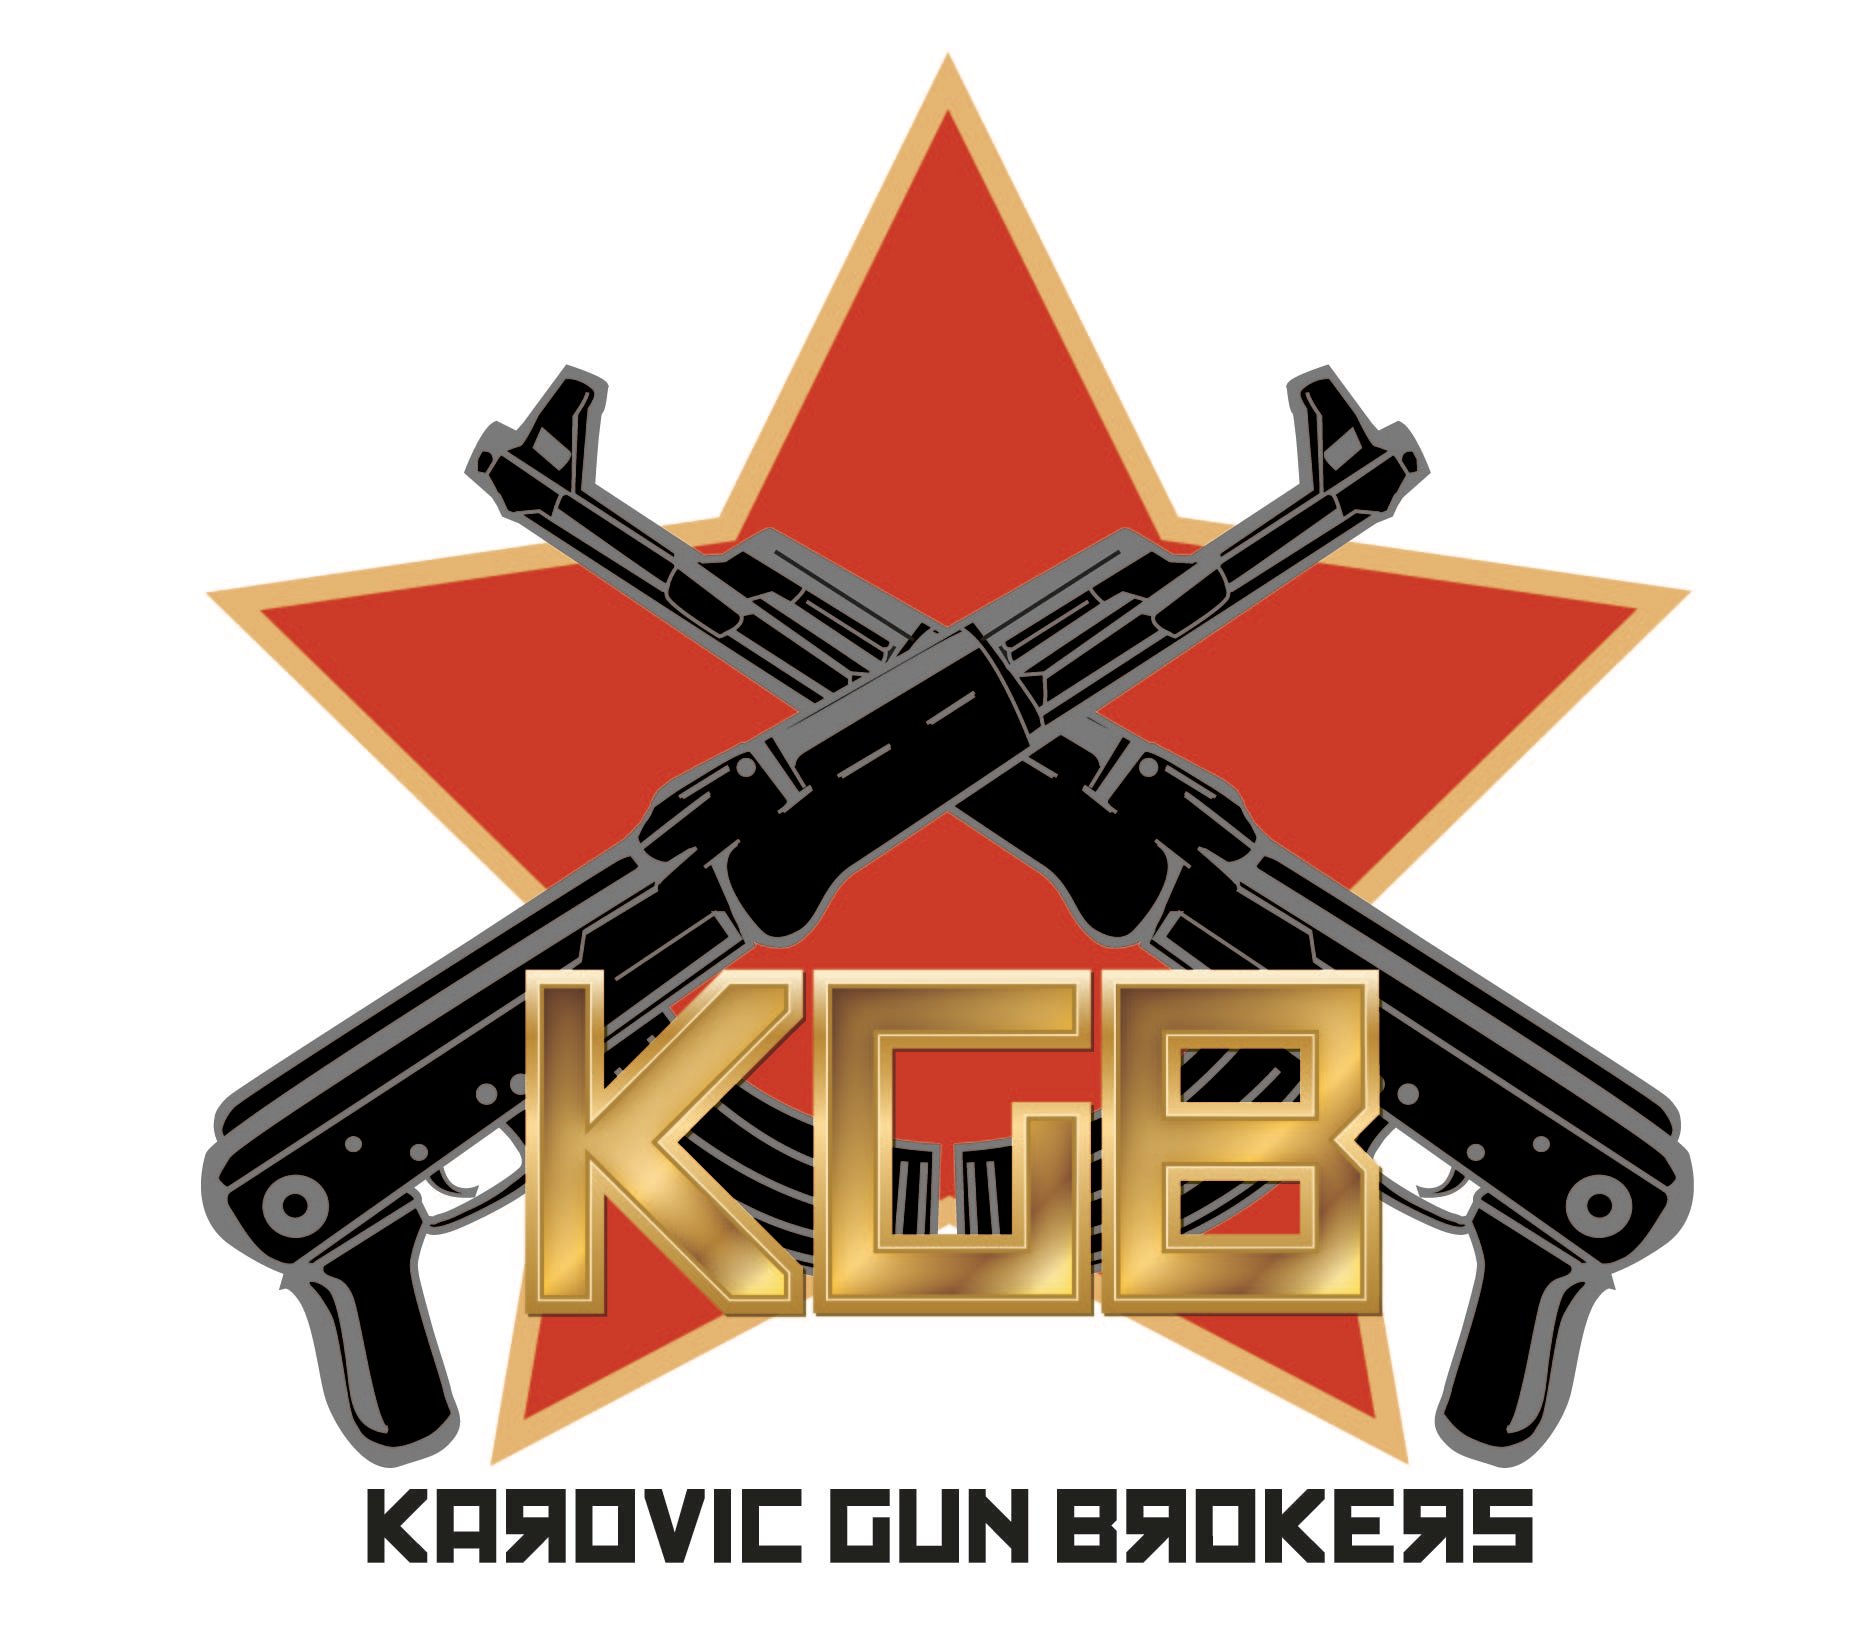 Kbg Logo - Logo Design for K.G.B. or Karovic Gun Brokers or KGBsales by NiteOwl ...